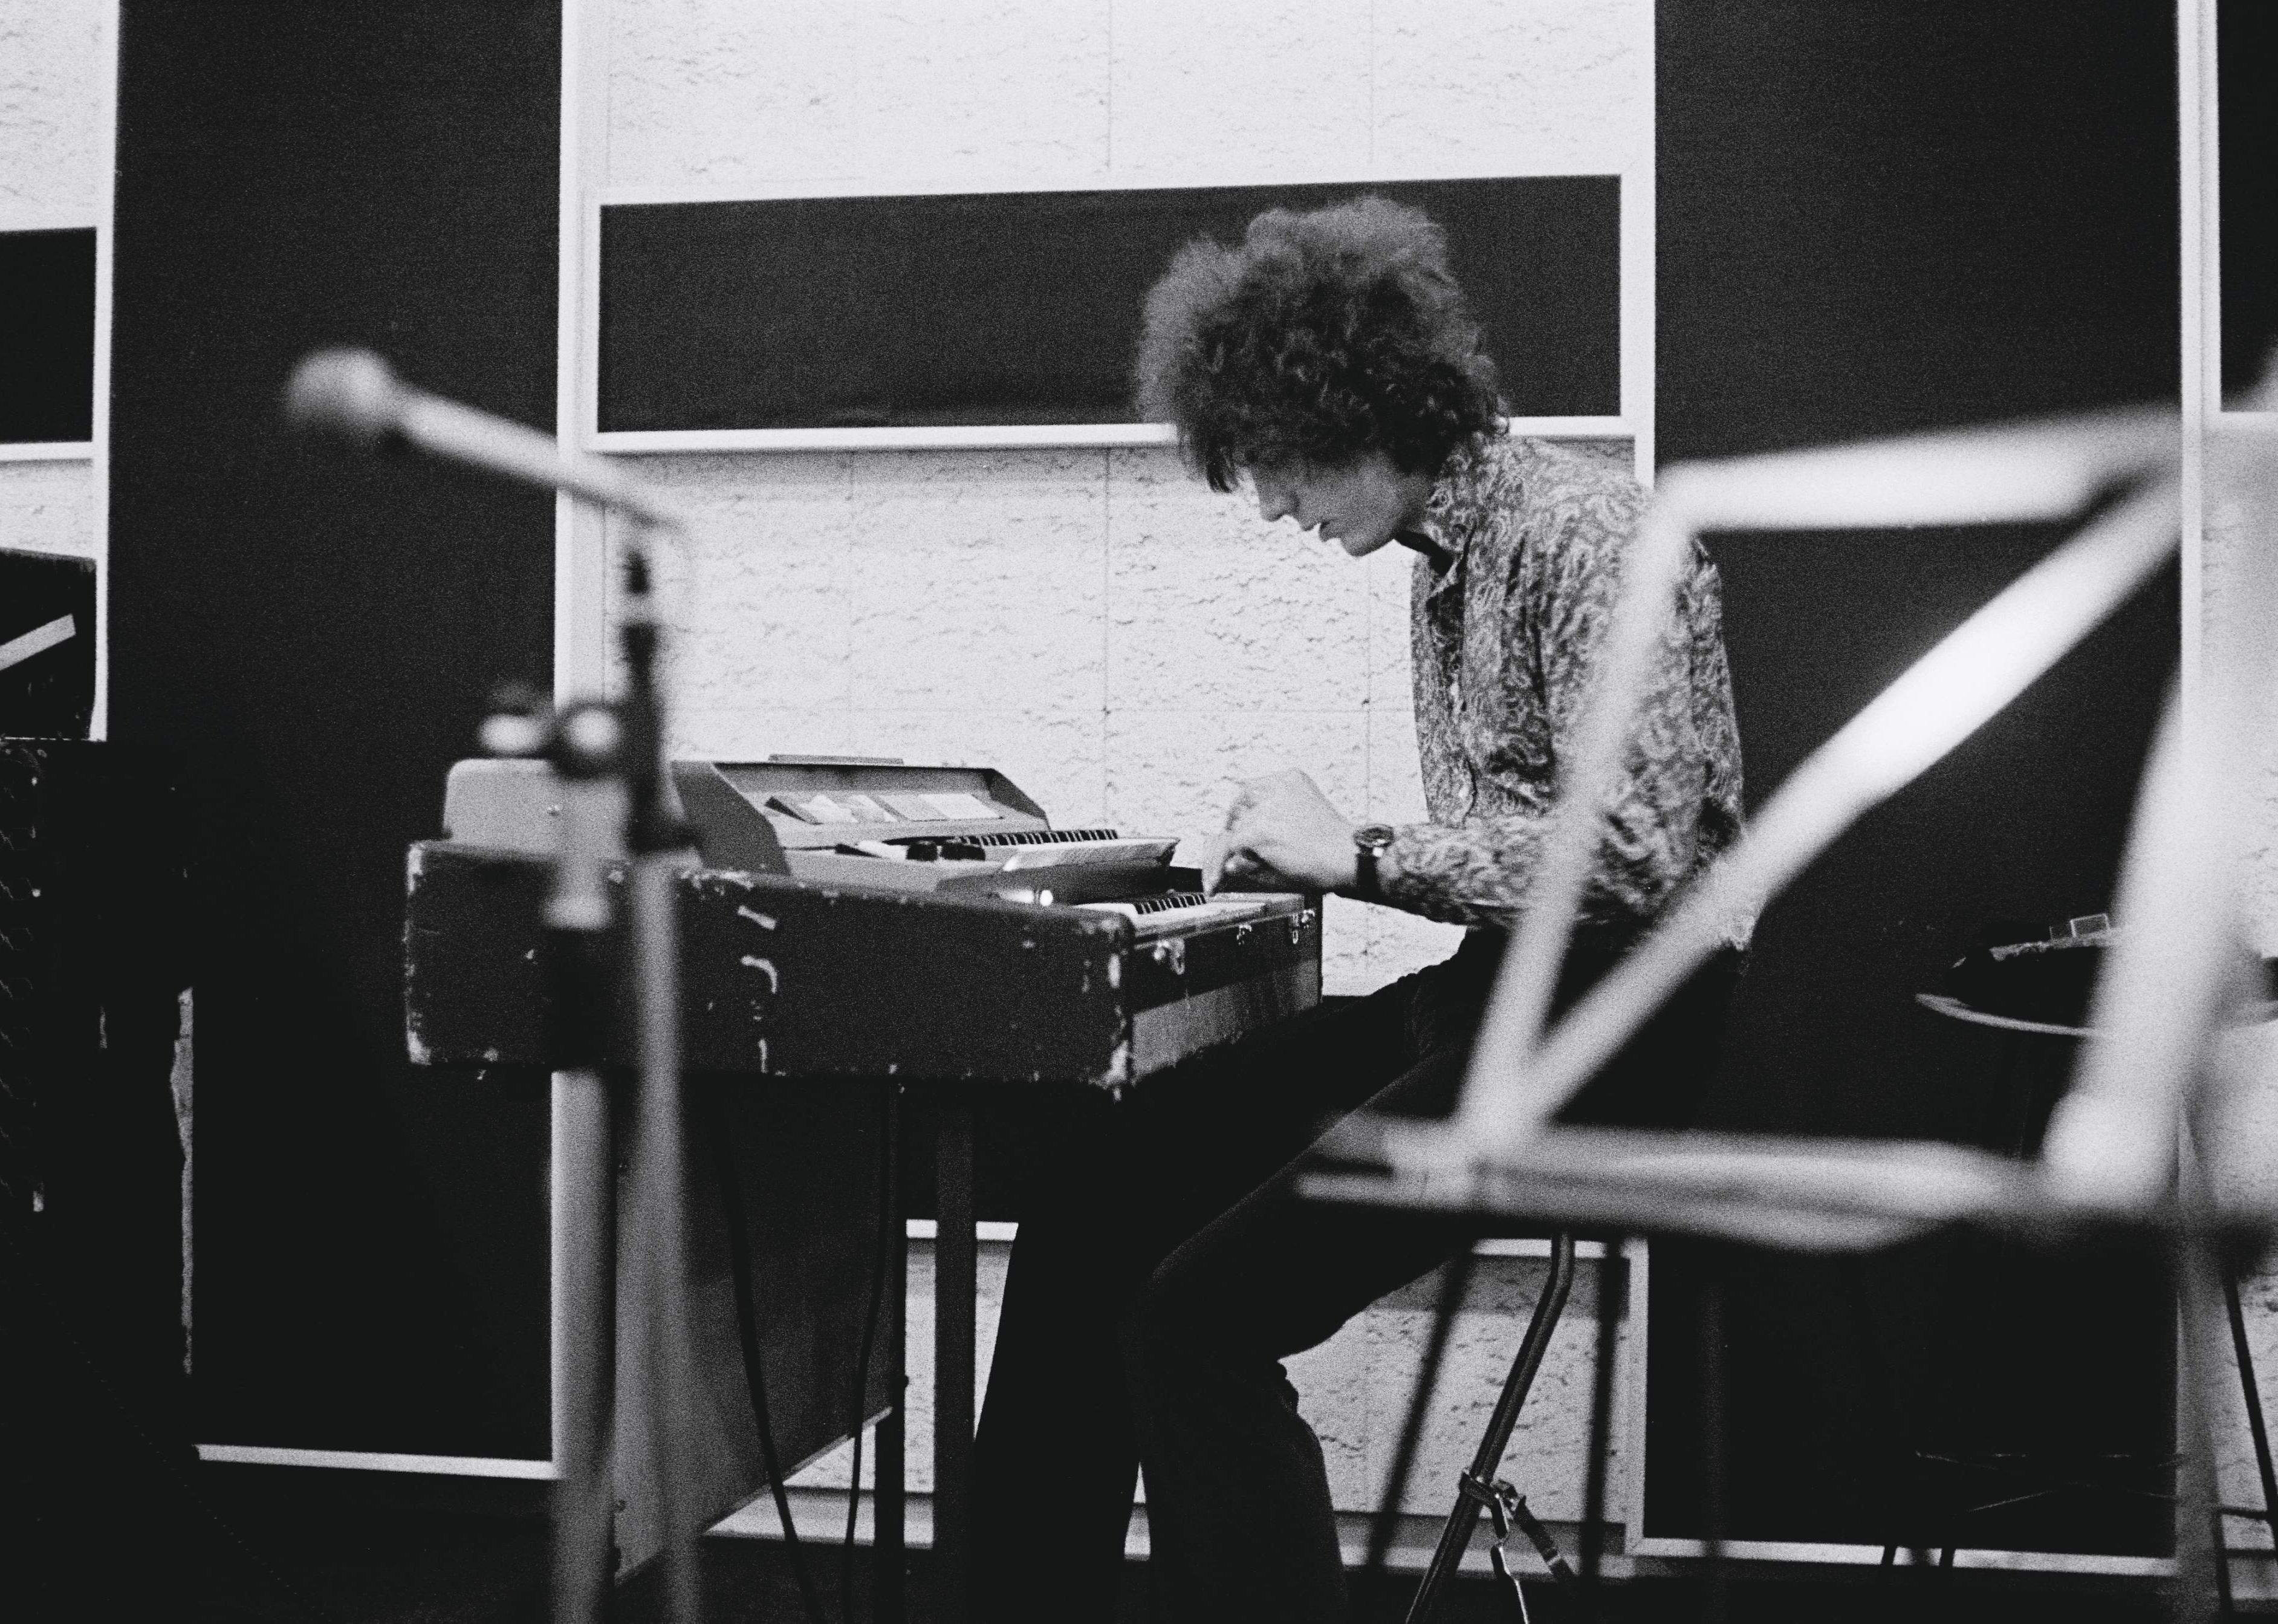 Syd Barrett playing keyboards in a recording studio.